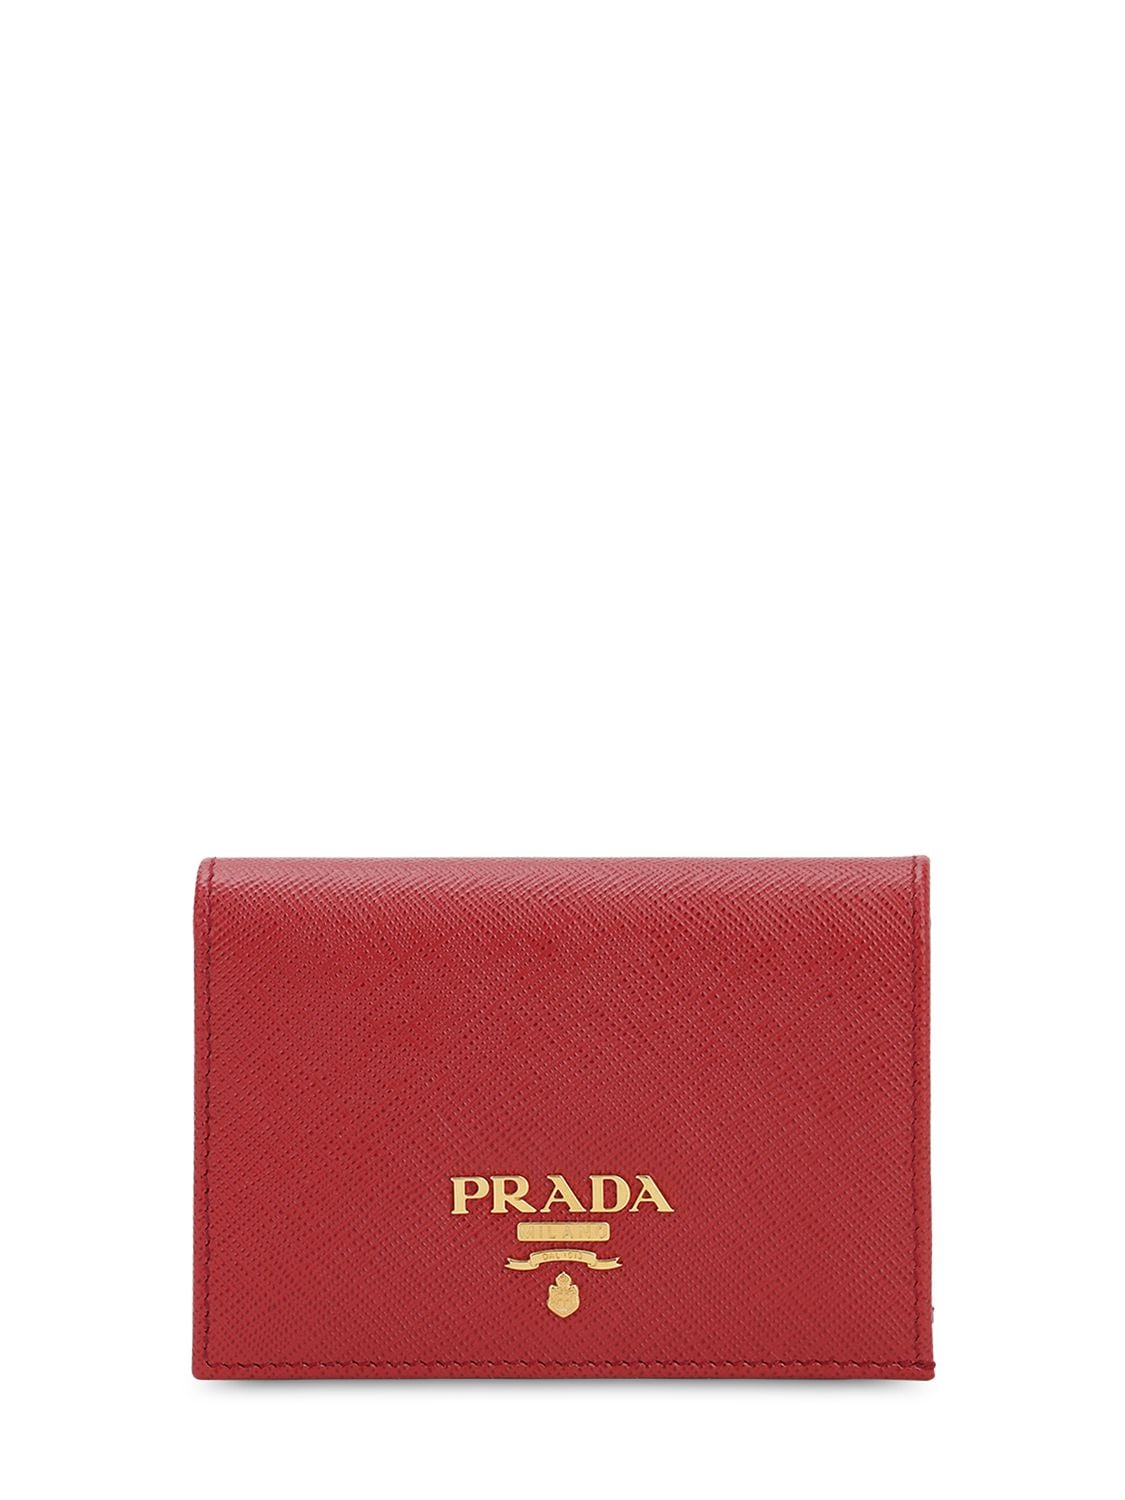 Prada Compact Saffiano Leather Wallet In Fuoco